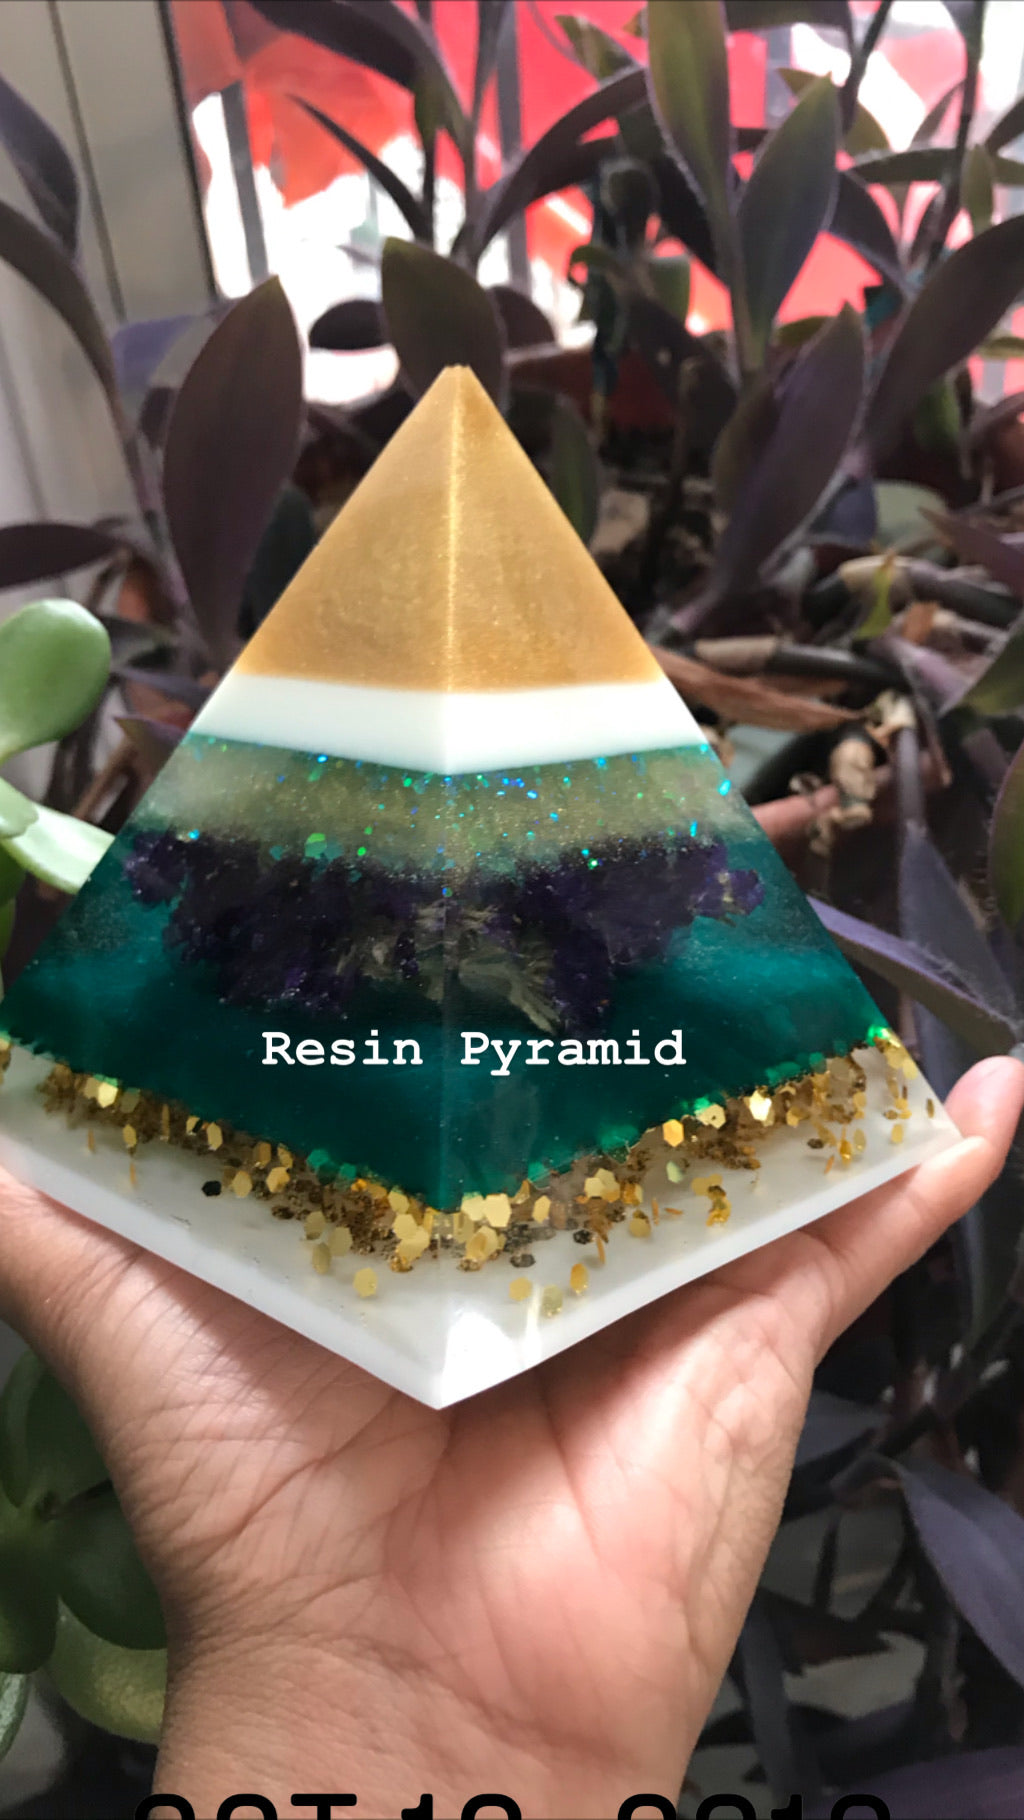 Resin Pyramid